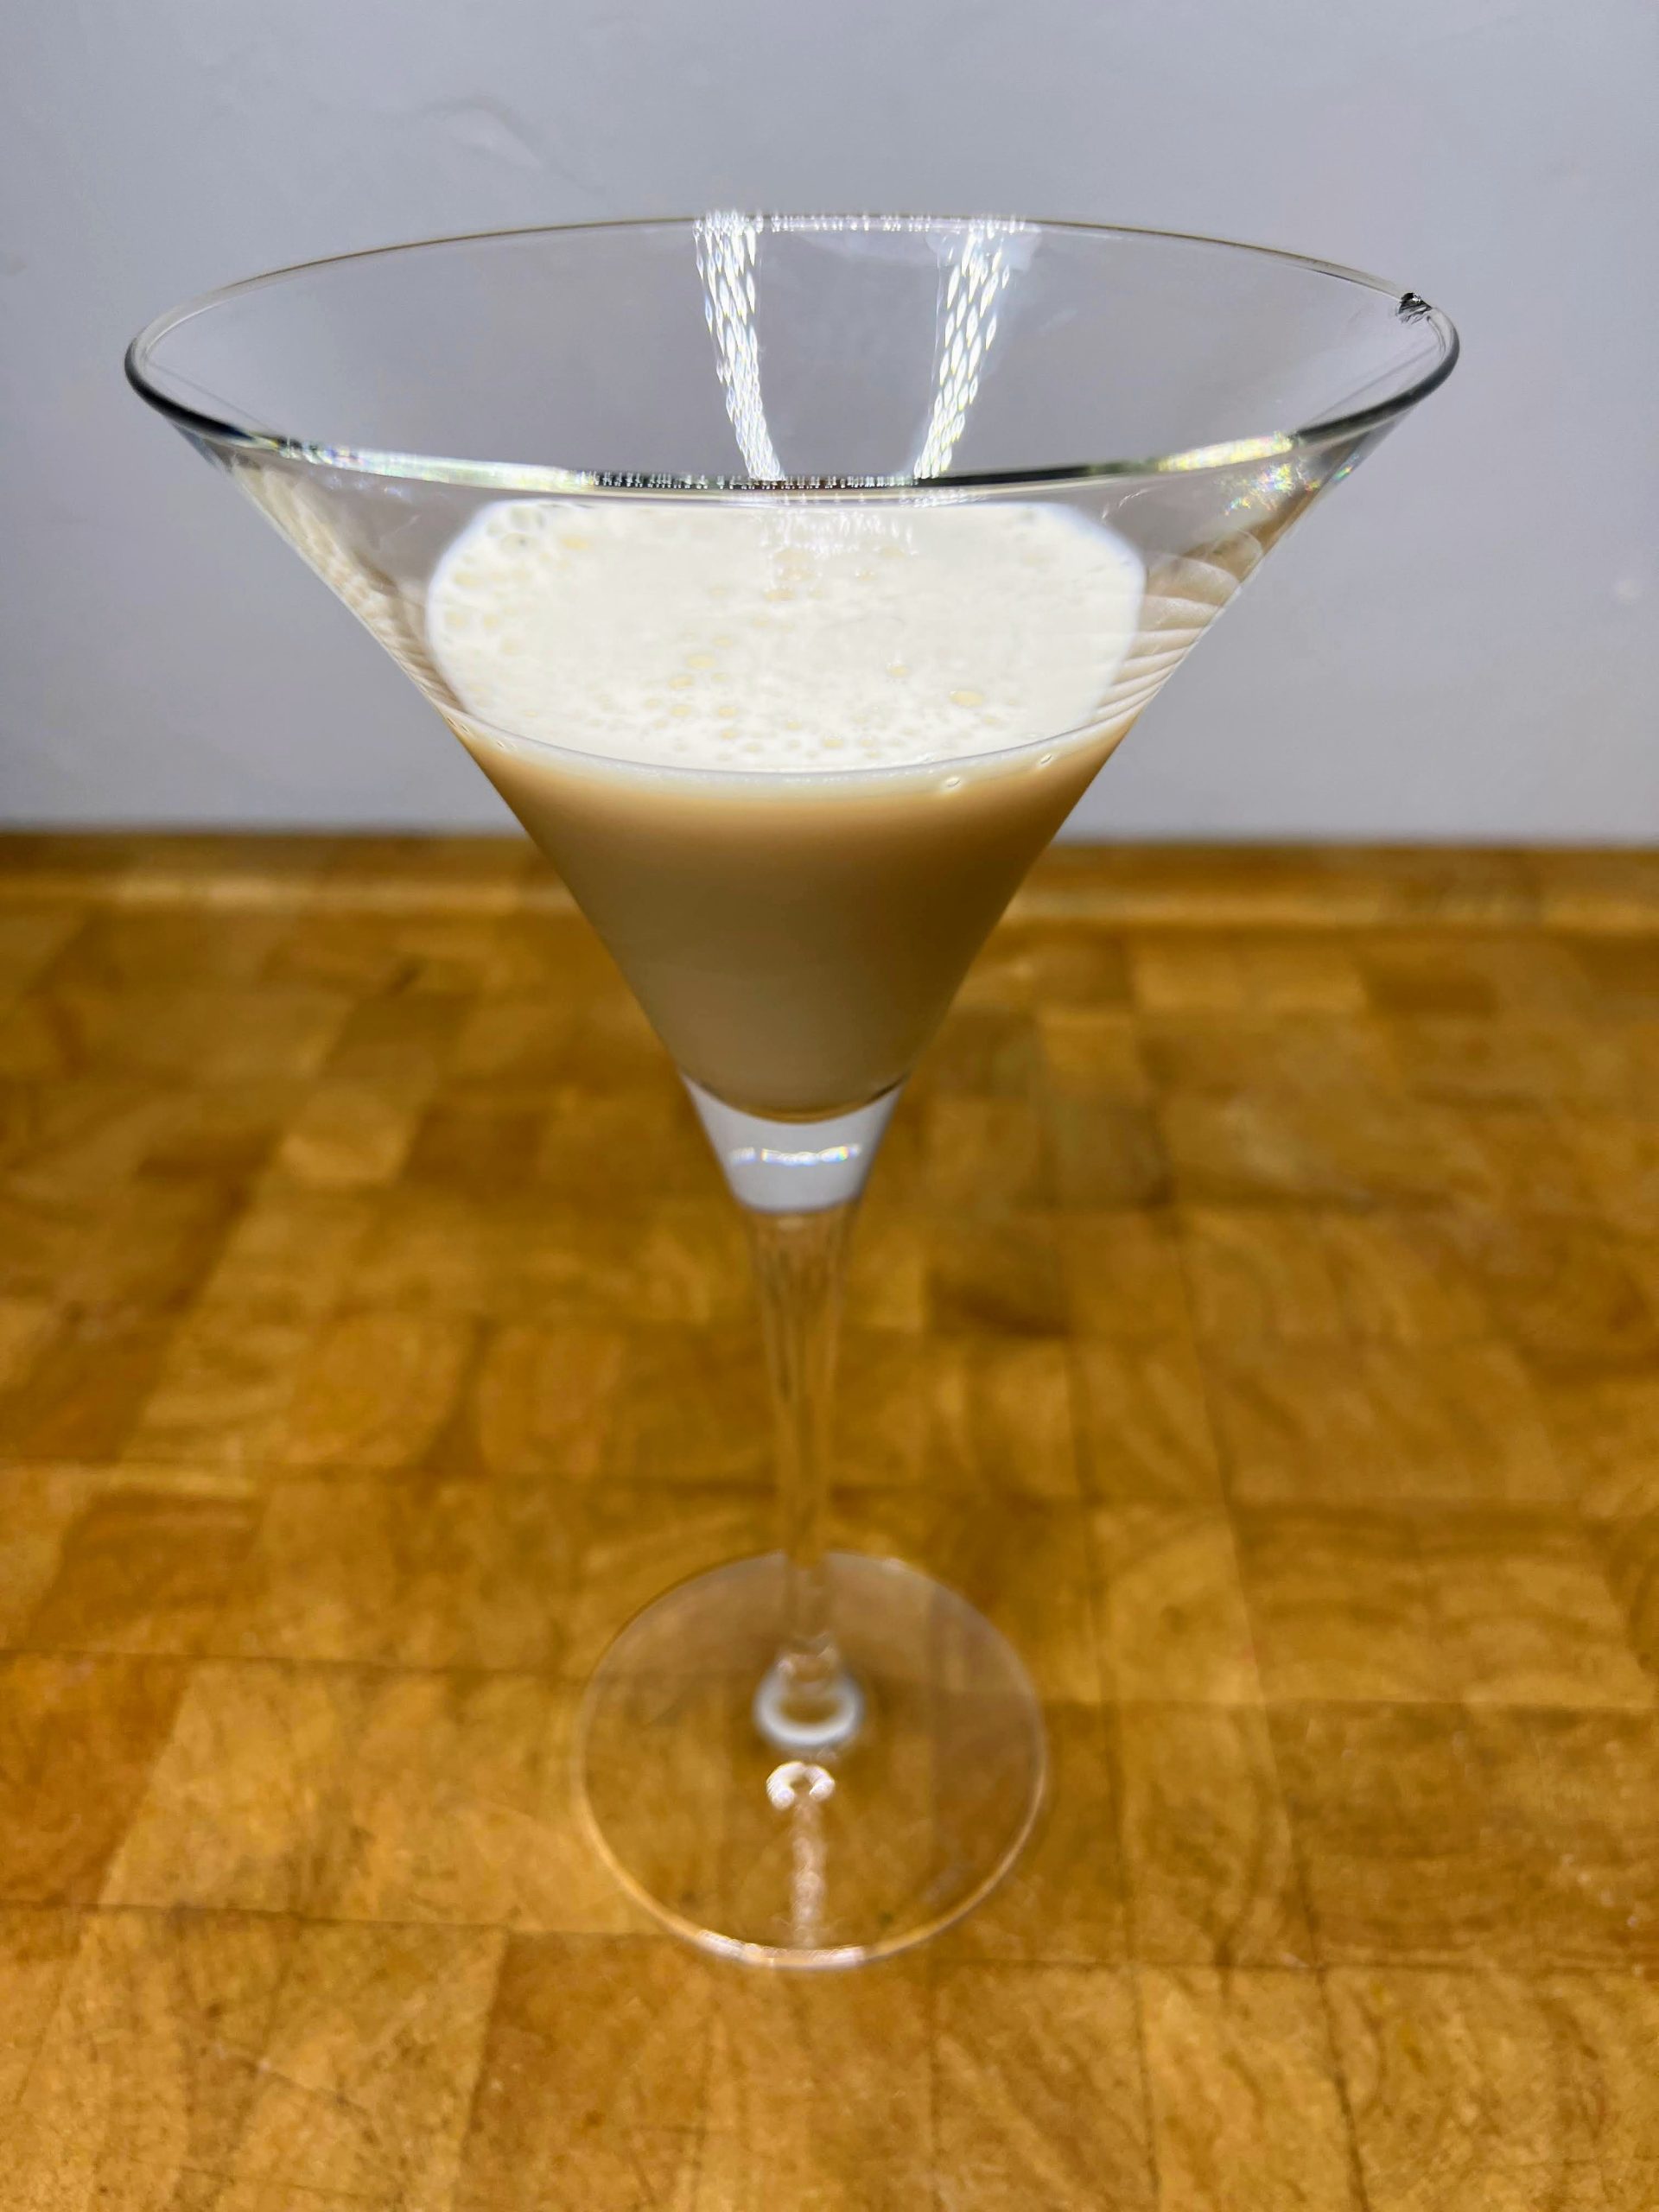 closeup of a banana cream martini in a martini glass on a wooden table